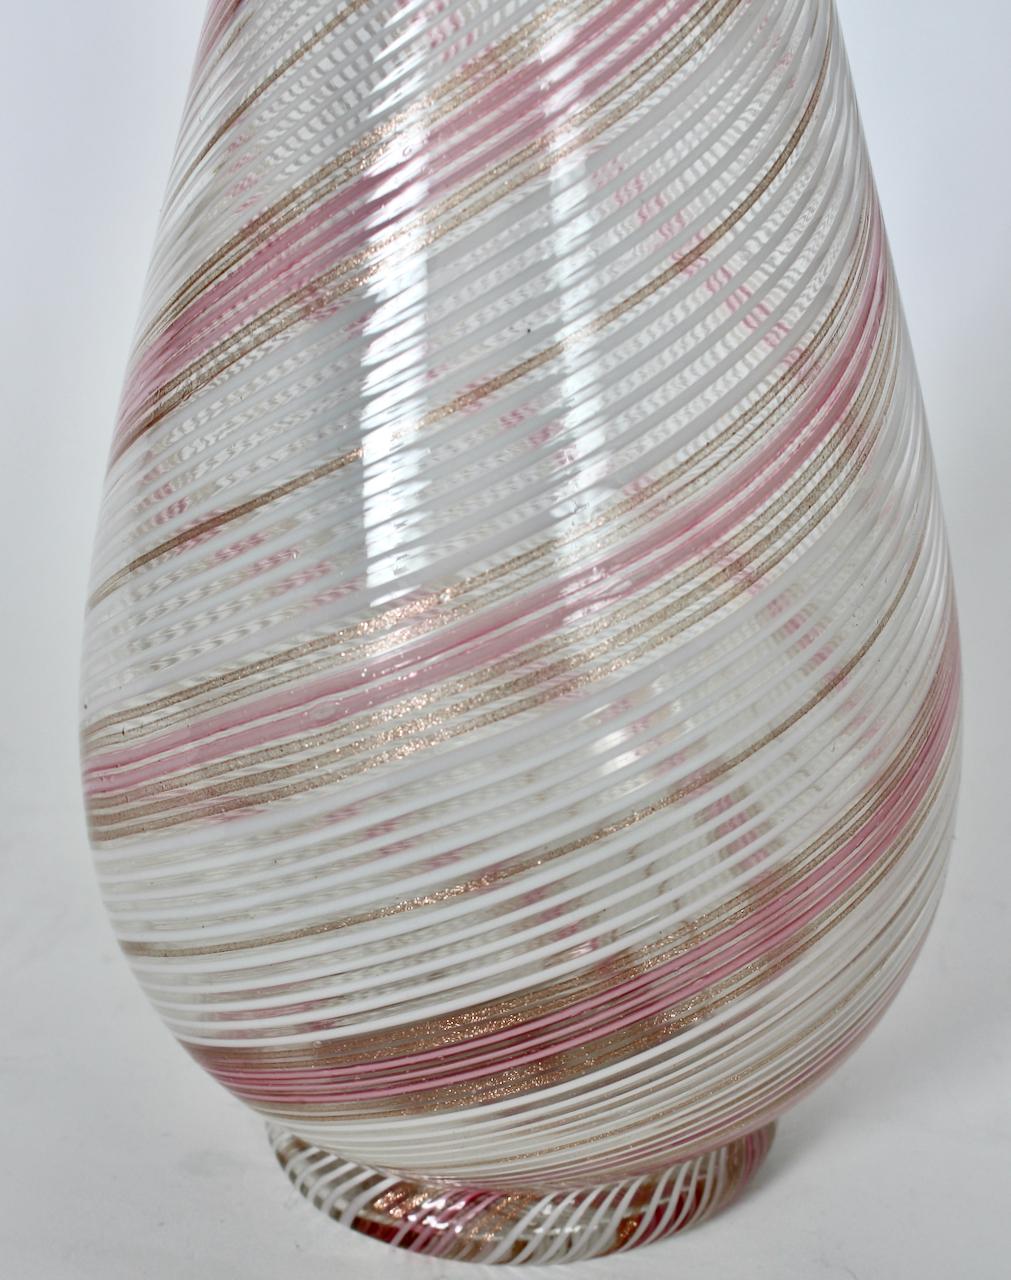 Dino Martens Mezza Filigrana vase de Murano rose, blanc et or rose, années 1950 en vente 7